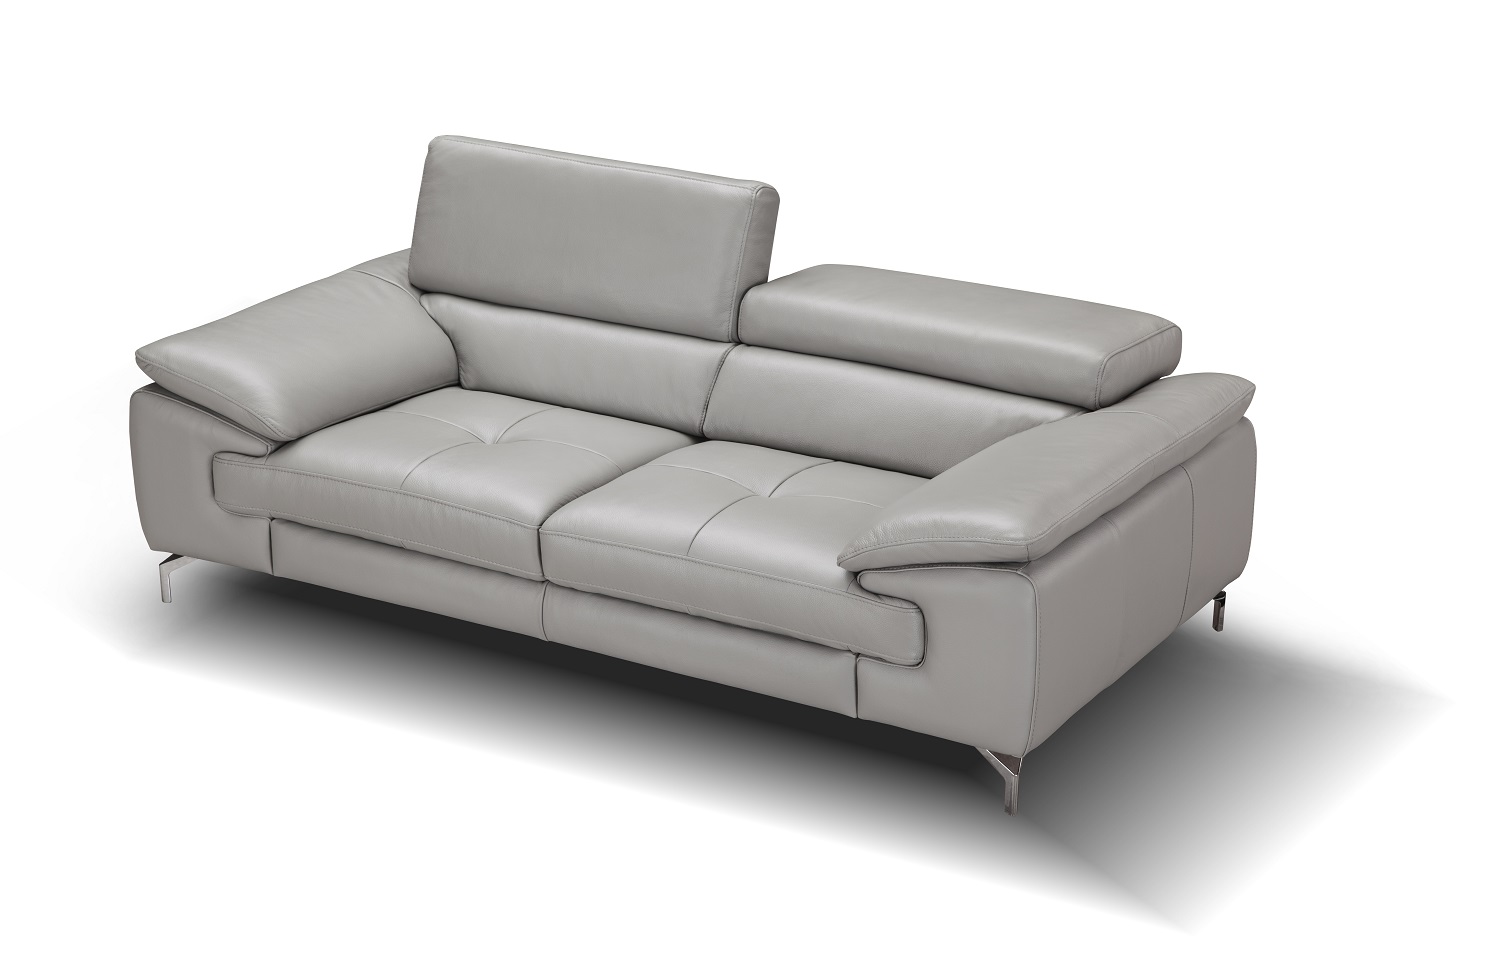 Trendy Sofa and Loveseat in Premium Leather